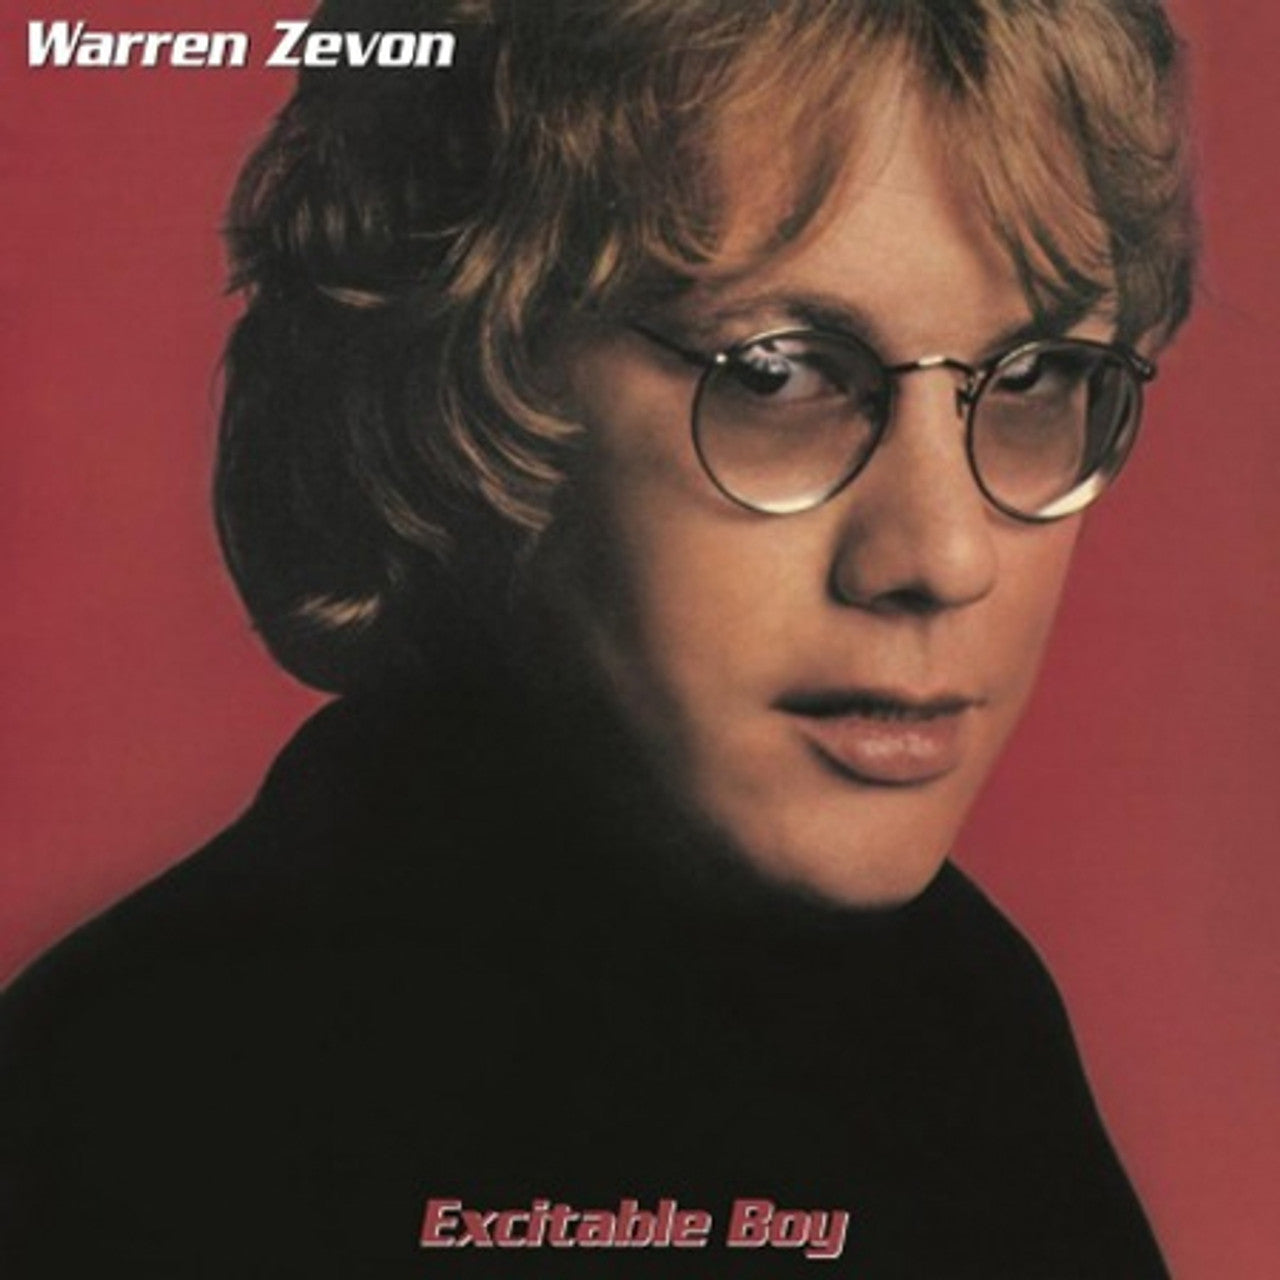 Warren Zevon | Excitable Boy